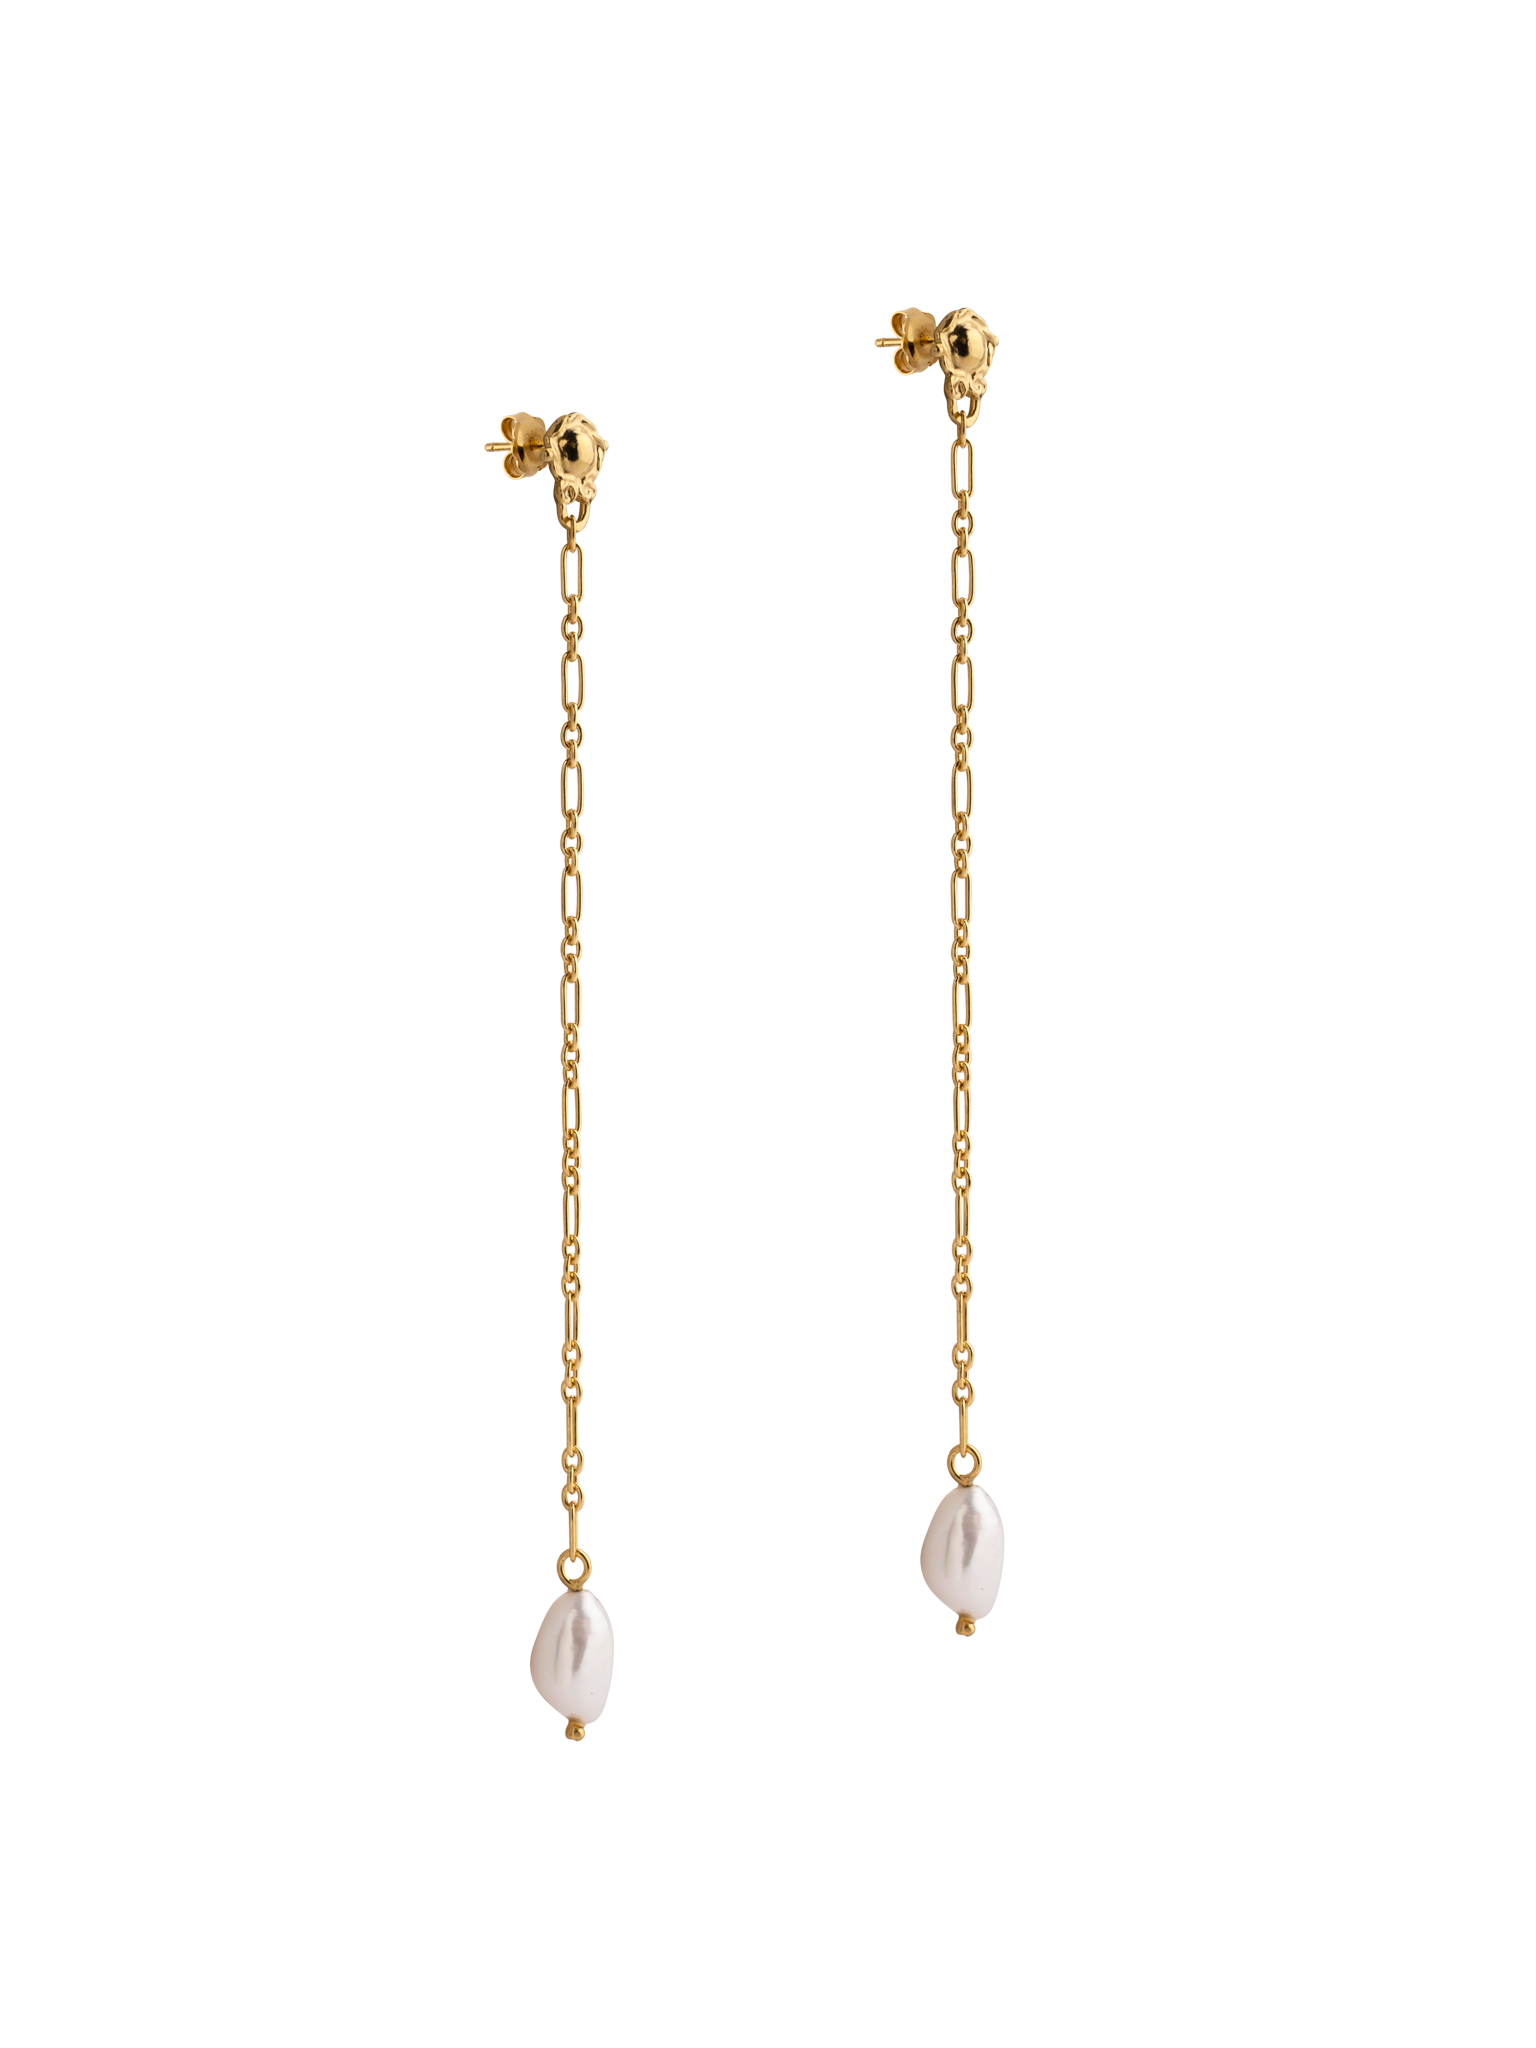 Isa earrings in gold vermeil by Beatriz Jardinha | Finematter